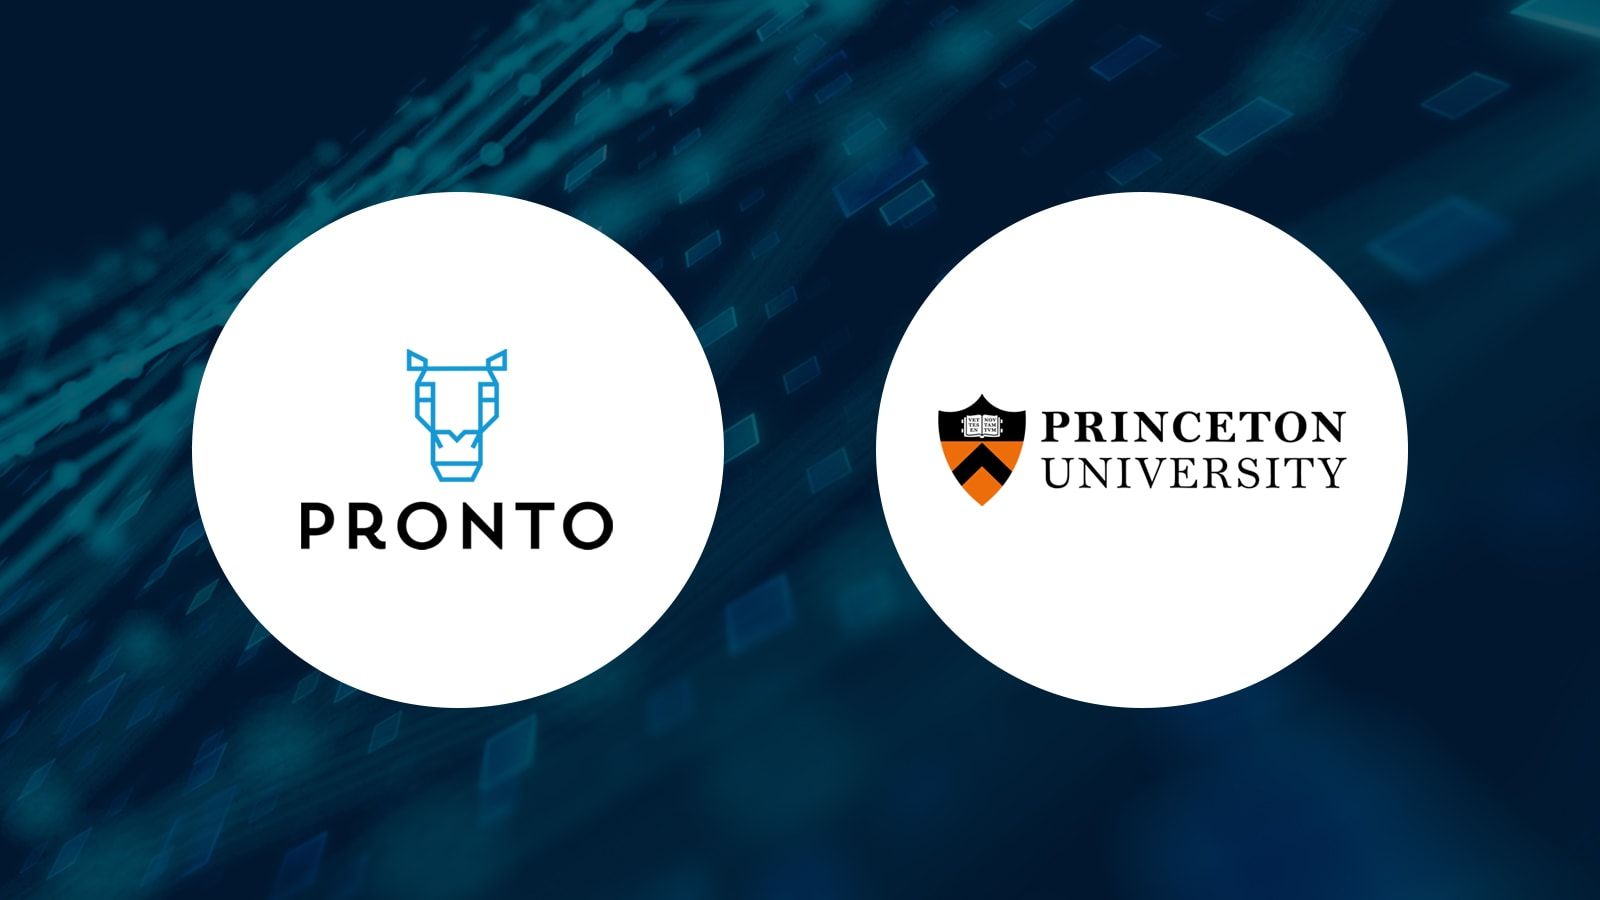 Logos of Project Pronto and Princeton University